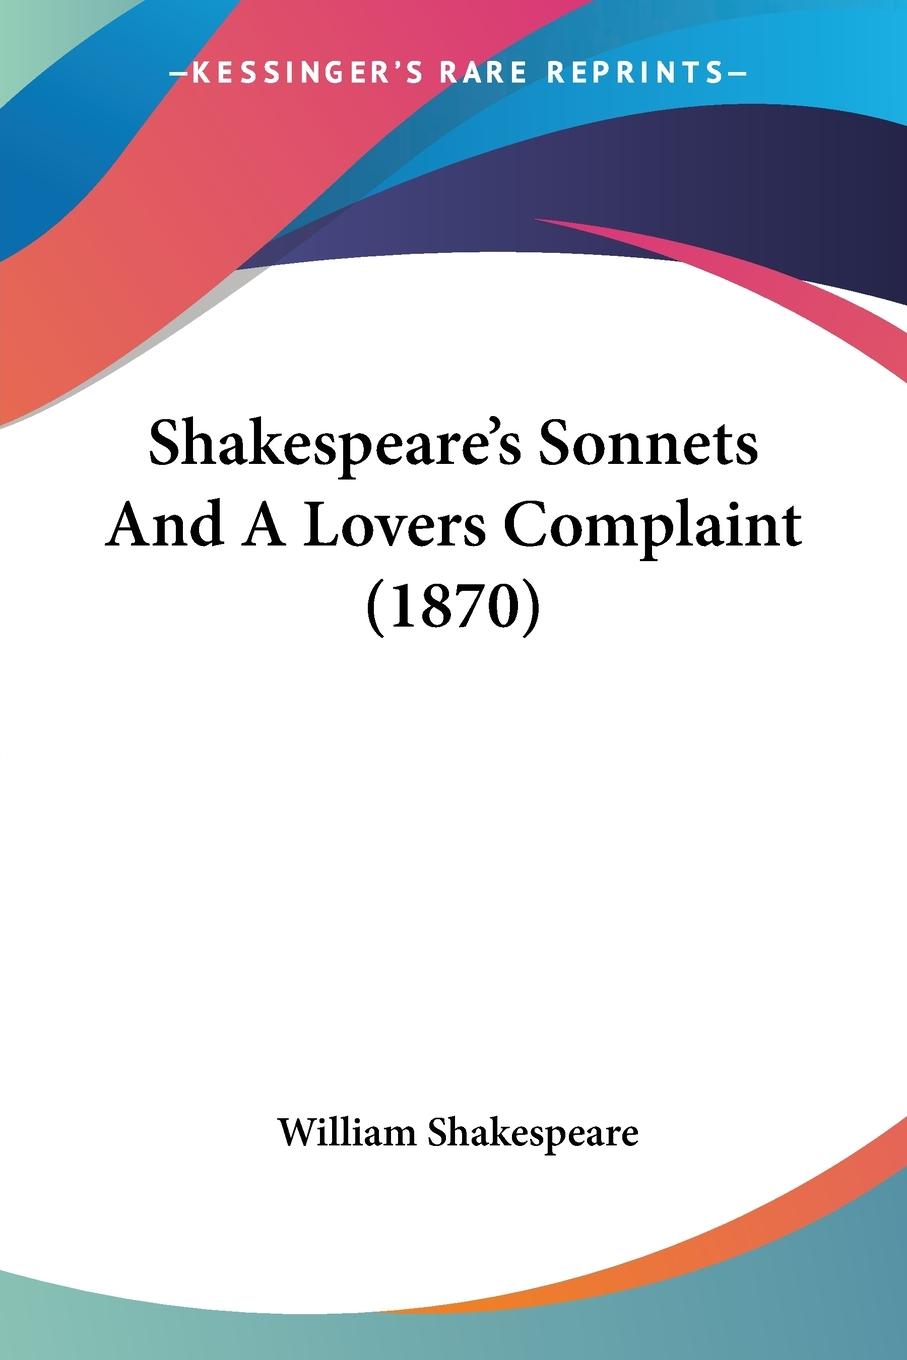 Shakespeare's Sonnets And A Lovers Complaint (1870) / William Shakespeare / Taschenbuch / Paperback / Englisch / 2009 / Kessinger Publishing, LLC / EAN 9781104654566 - Shakespeare, William